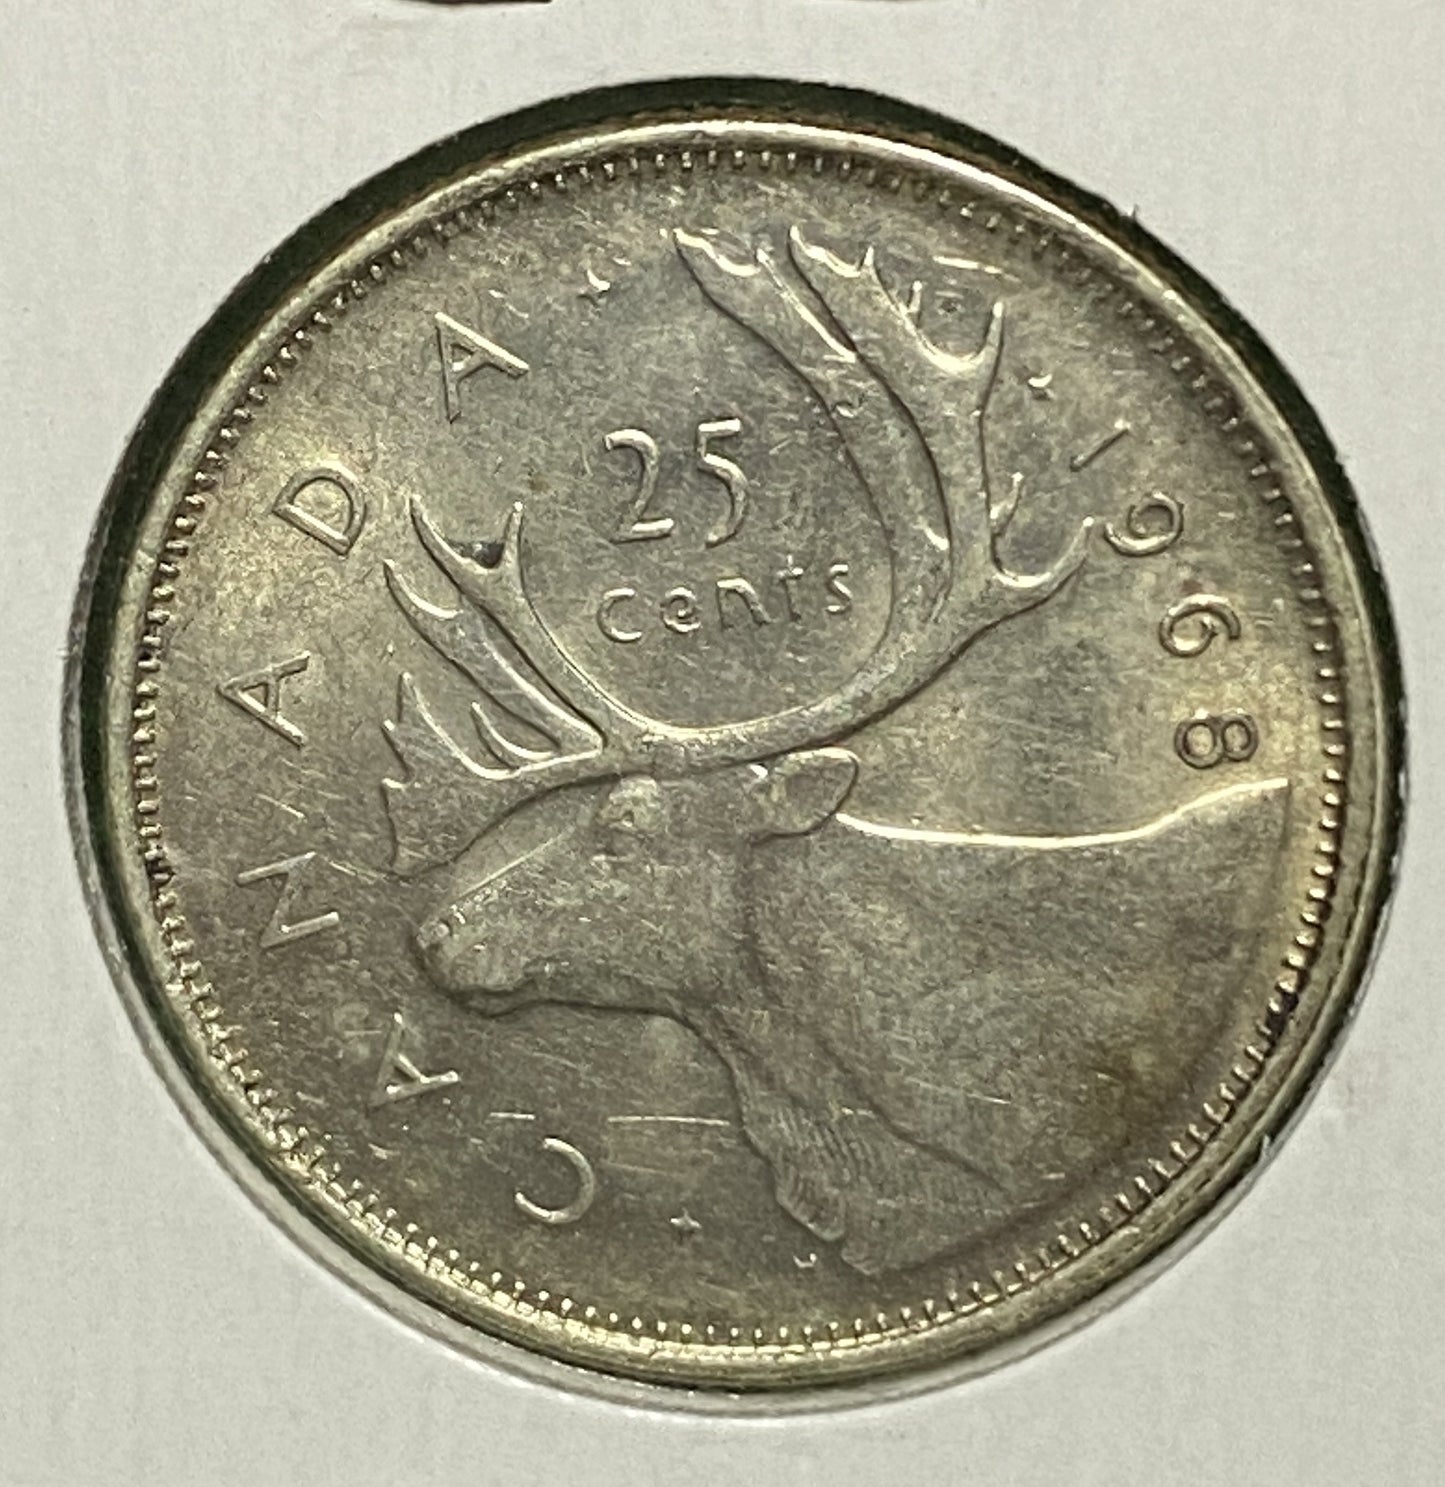 CANADIAN 1968 SILVER 25 CENTS QUARTER COIN Queen Elizabeth II  EF / AU CONDITION